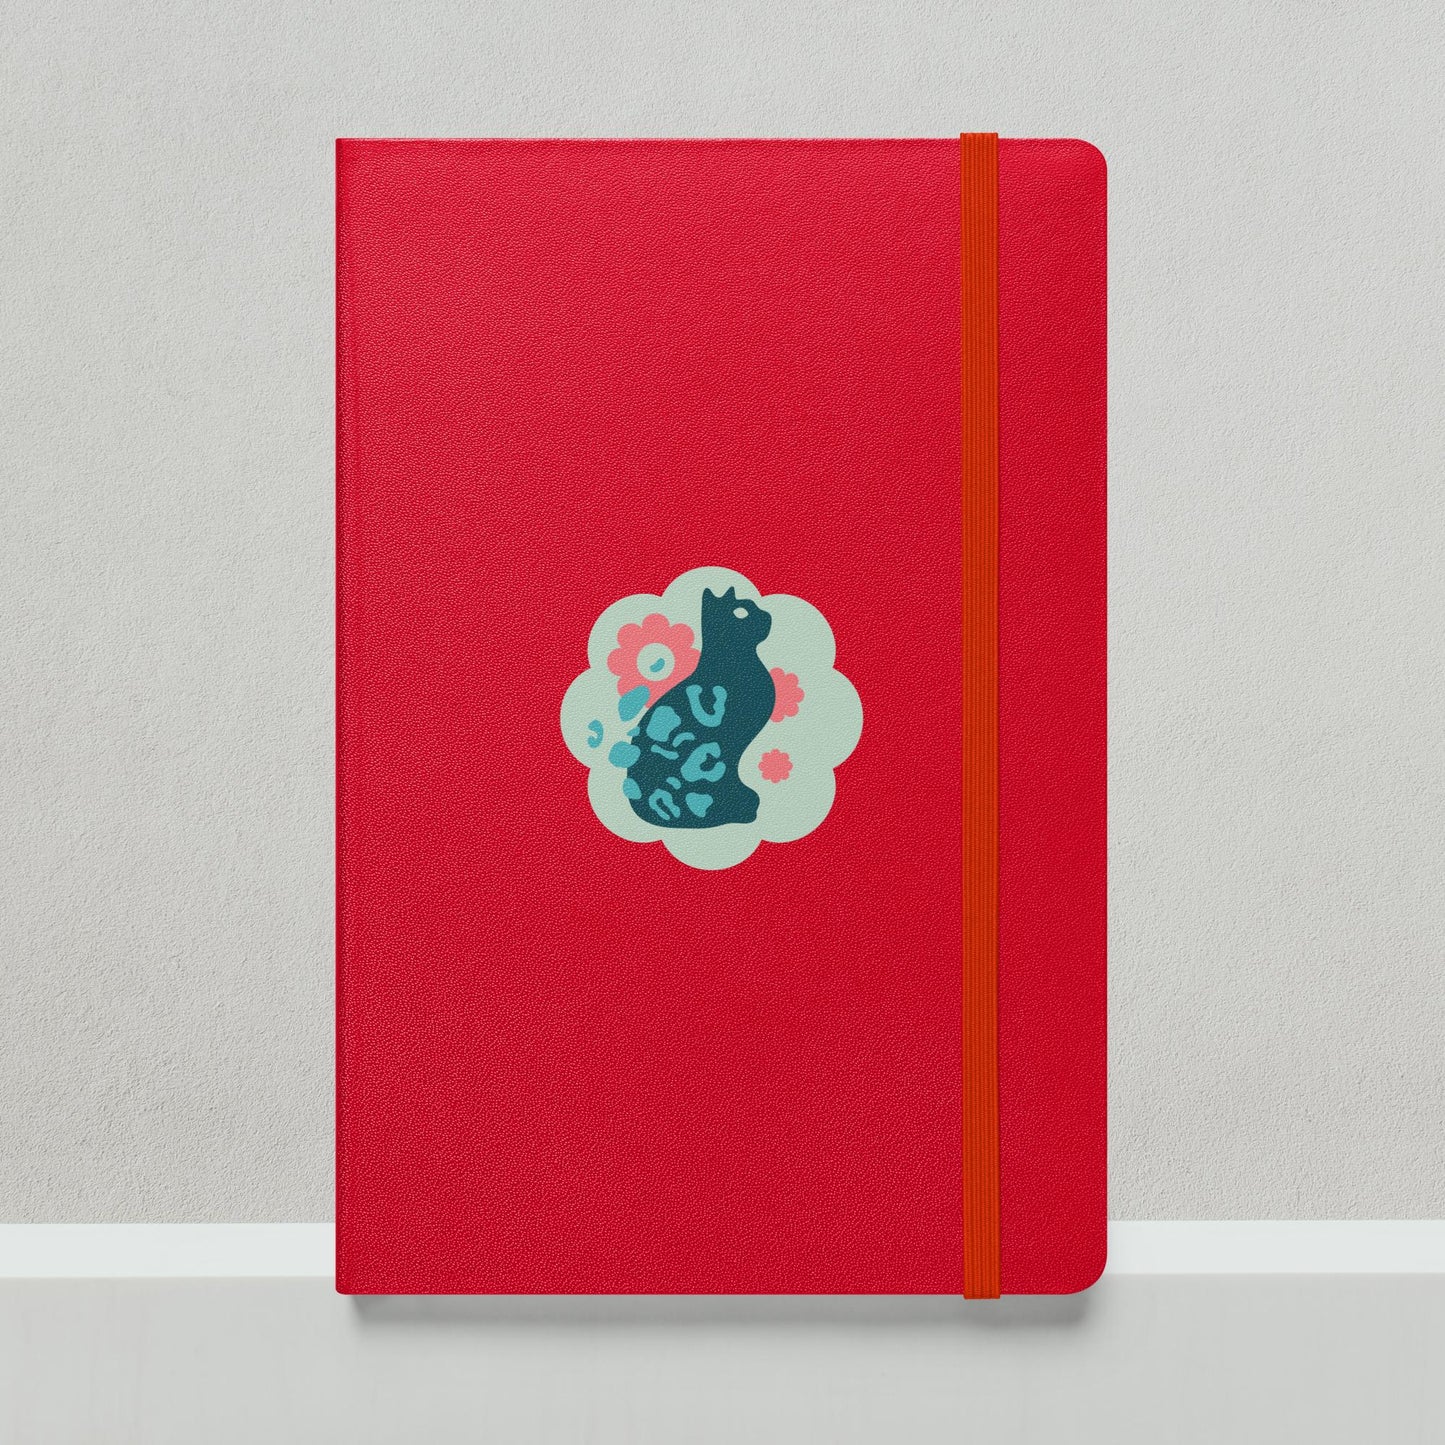 Blue Cat Hardcover Bound Notebook